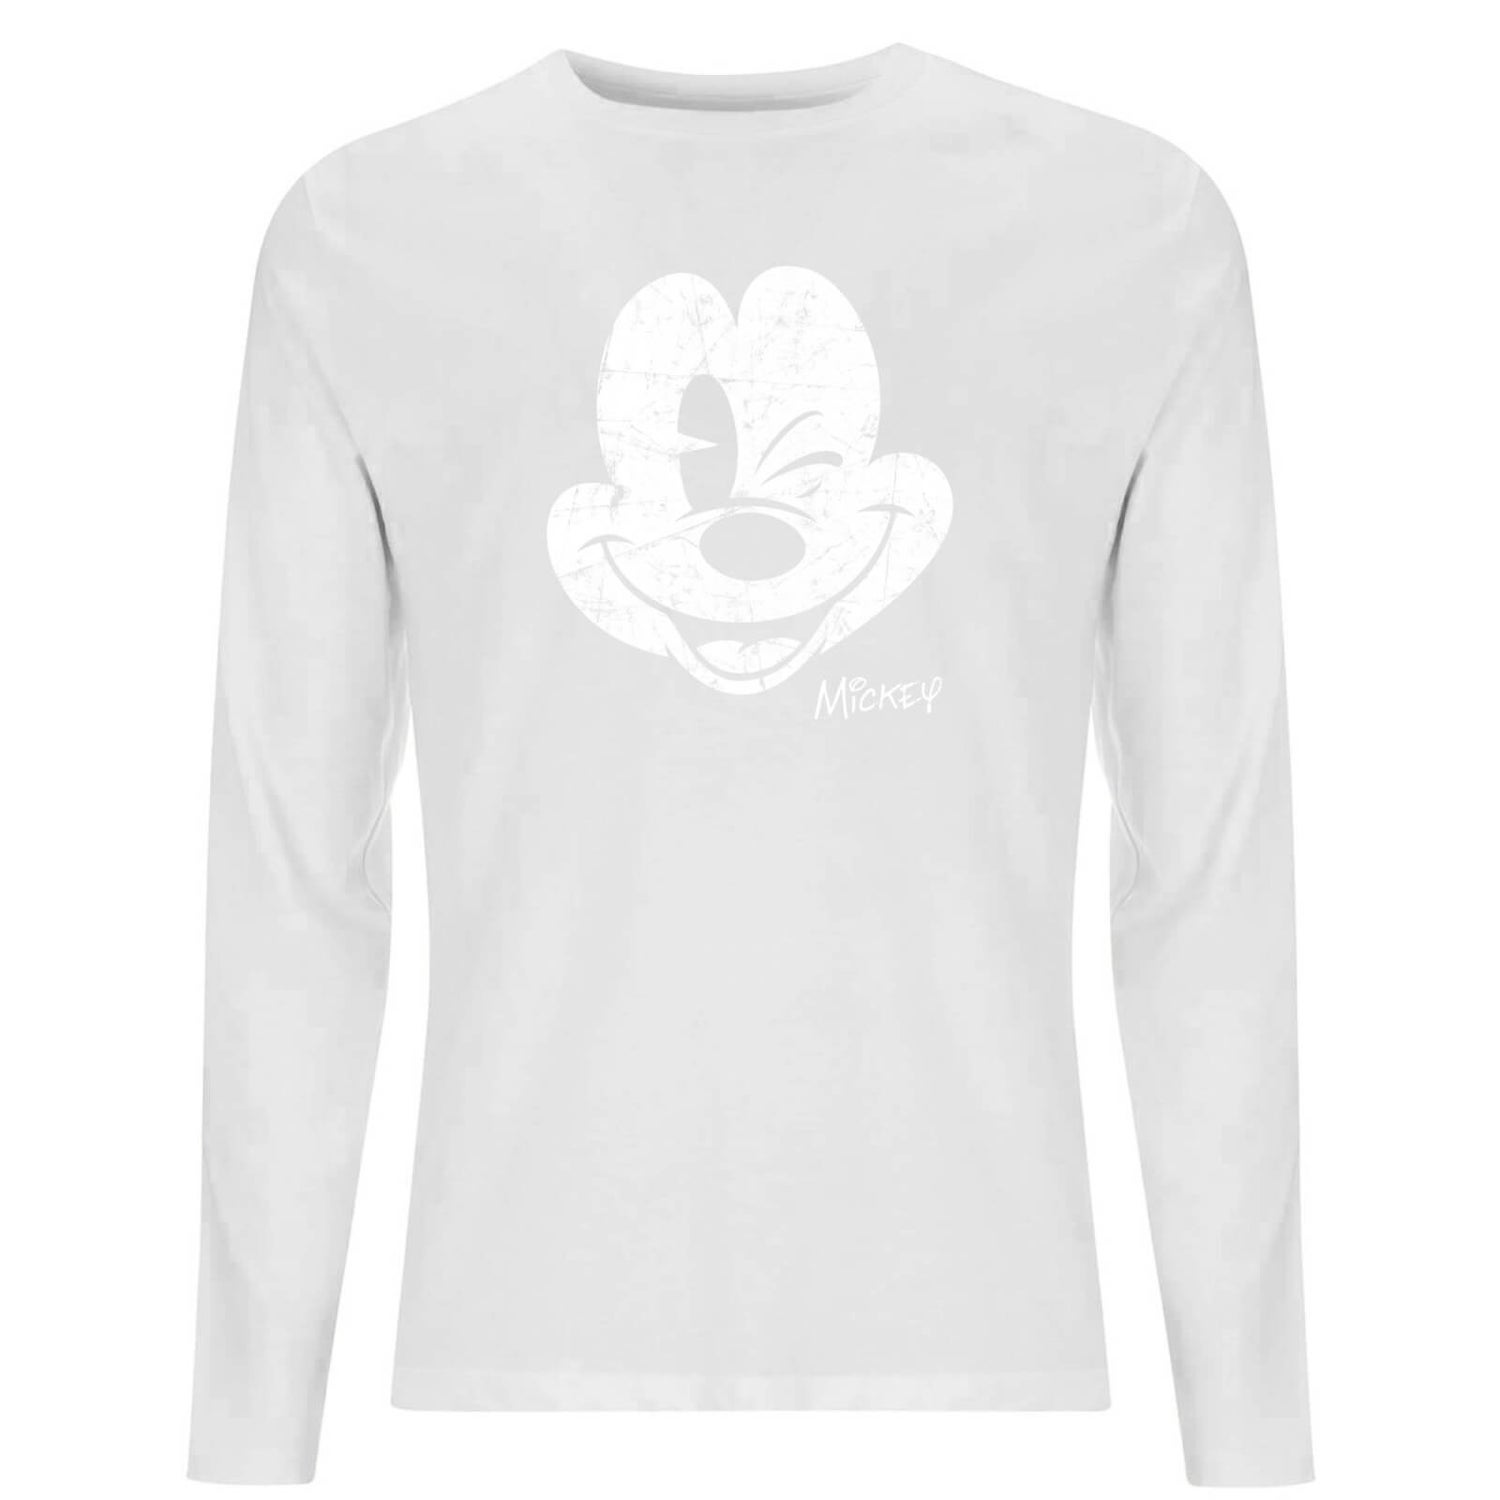 Disney Mickey Mouse Worn Face Men's Long Sleeve T-Shirt - White